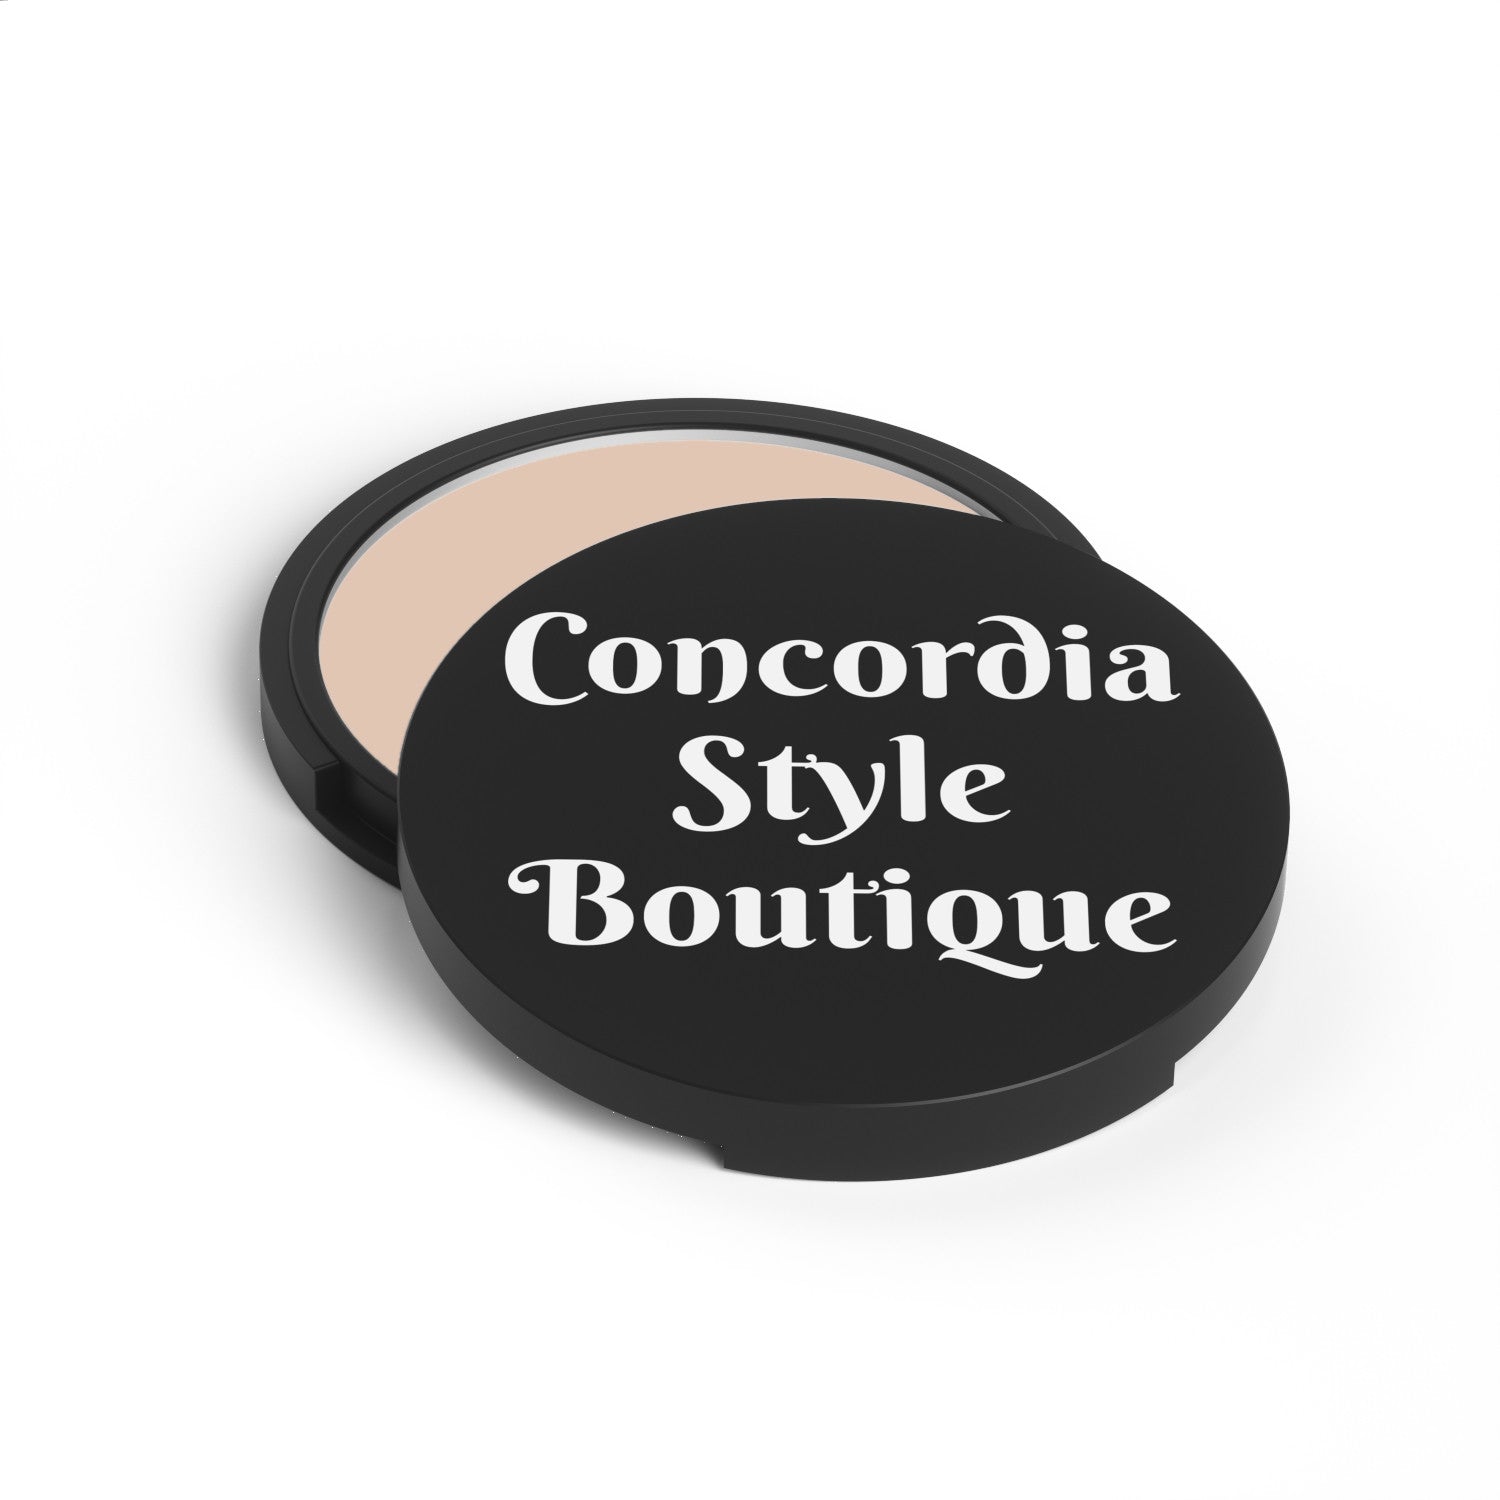 Bronzer 20 - Premium bronzer from Concordia Style Boutique - Just $24! Shop now at Concordia Style Boutique